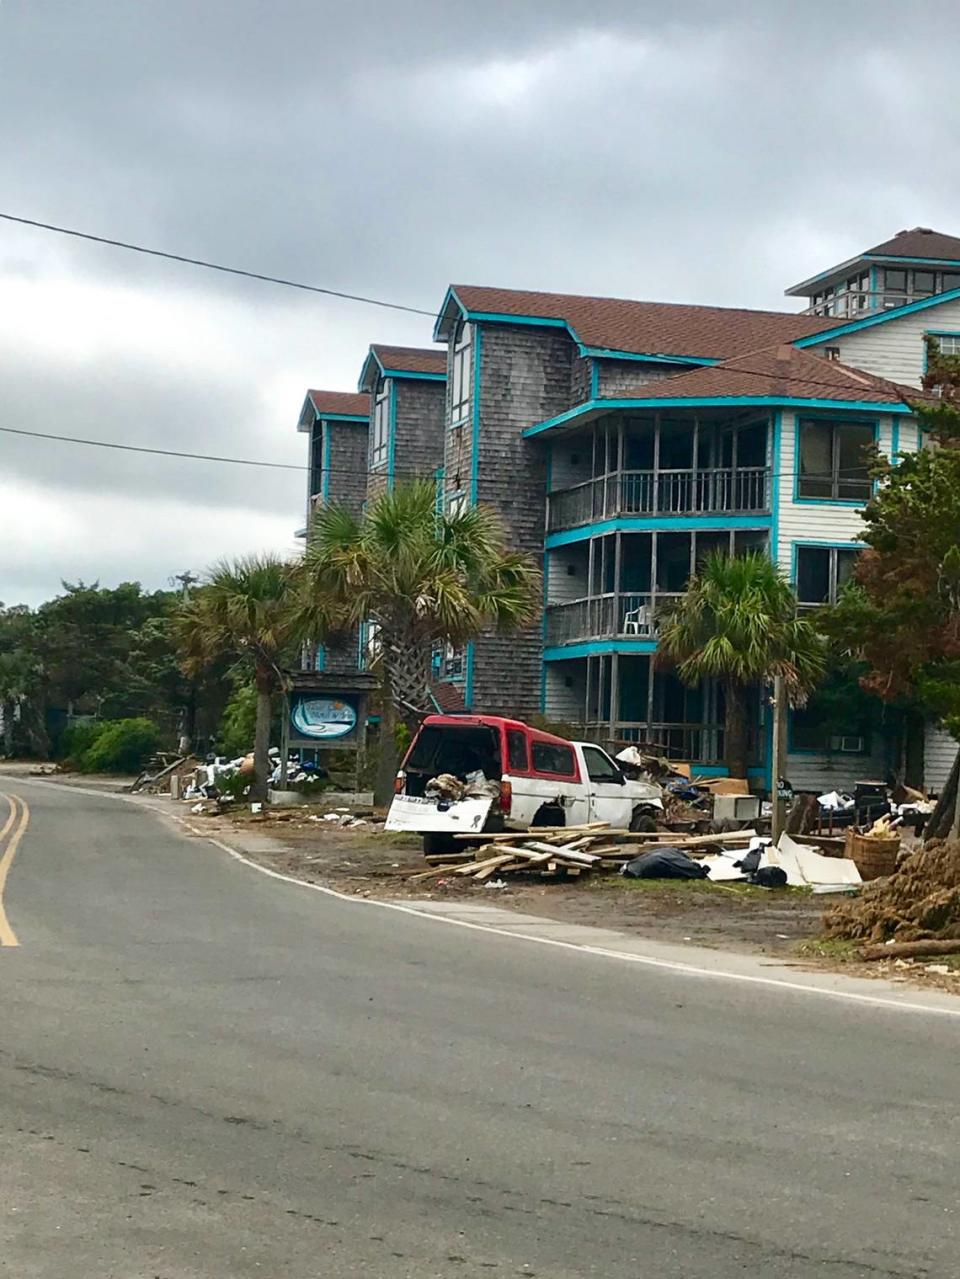 Hurricane Dorian hit the Outer Banks as a Category 1 hurricane in September 2019, leaving homes uninhabitable and severe damage across Ocracoke Island.